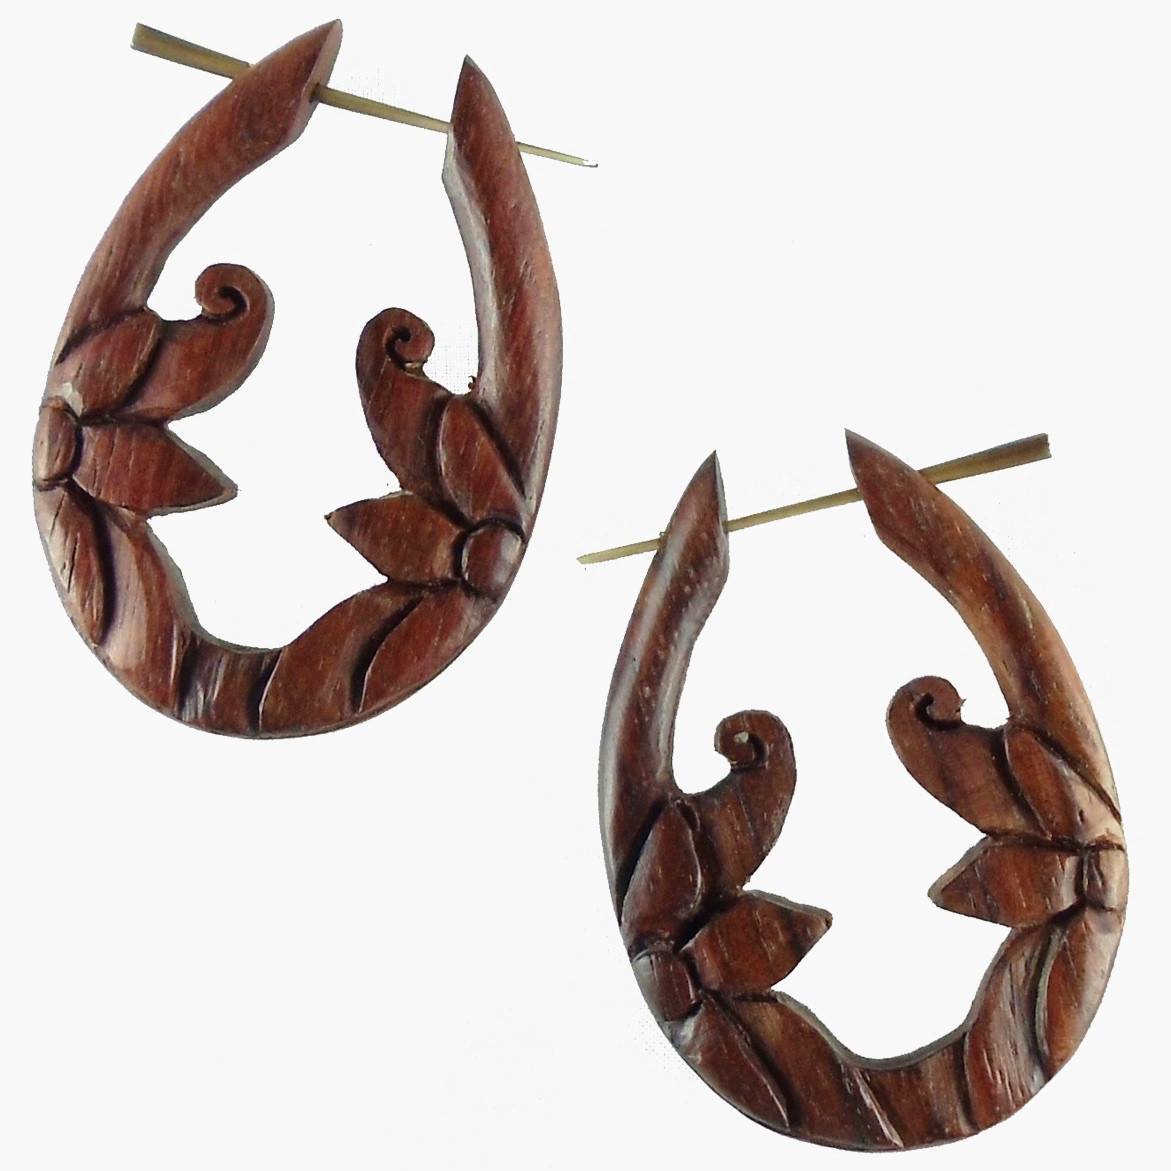 Natural Jewelry :|: Moon Flower. Wooden Hoop Earrings, Rosewood. 1 1/4 inch W x 1 3/4 inch L. | Wooden Hoop Earrings